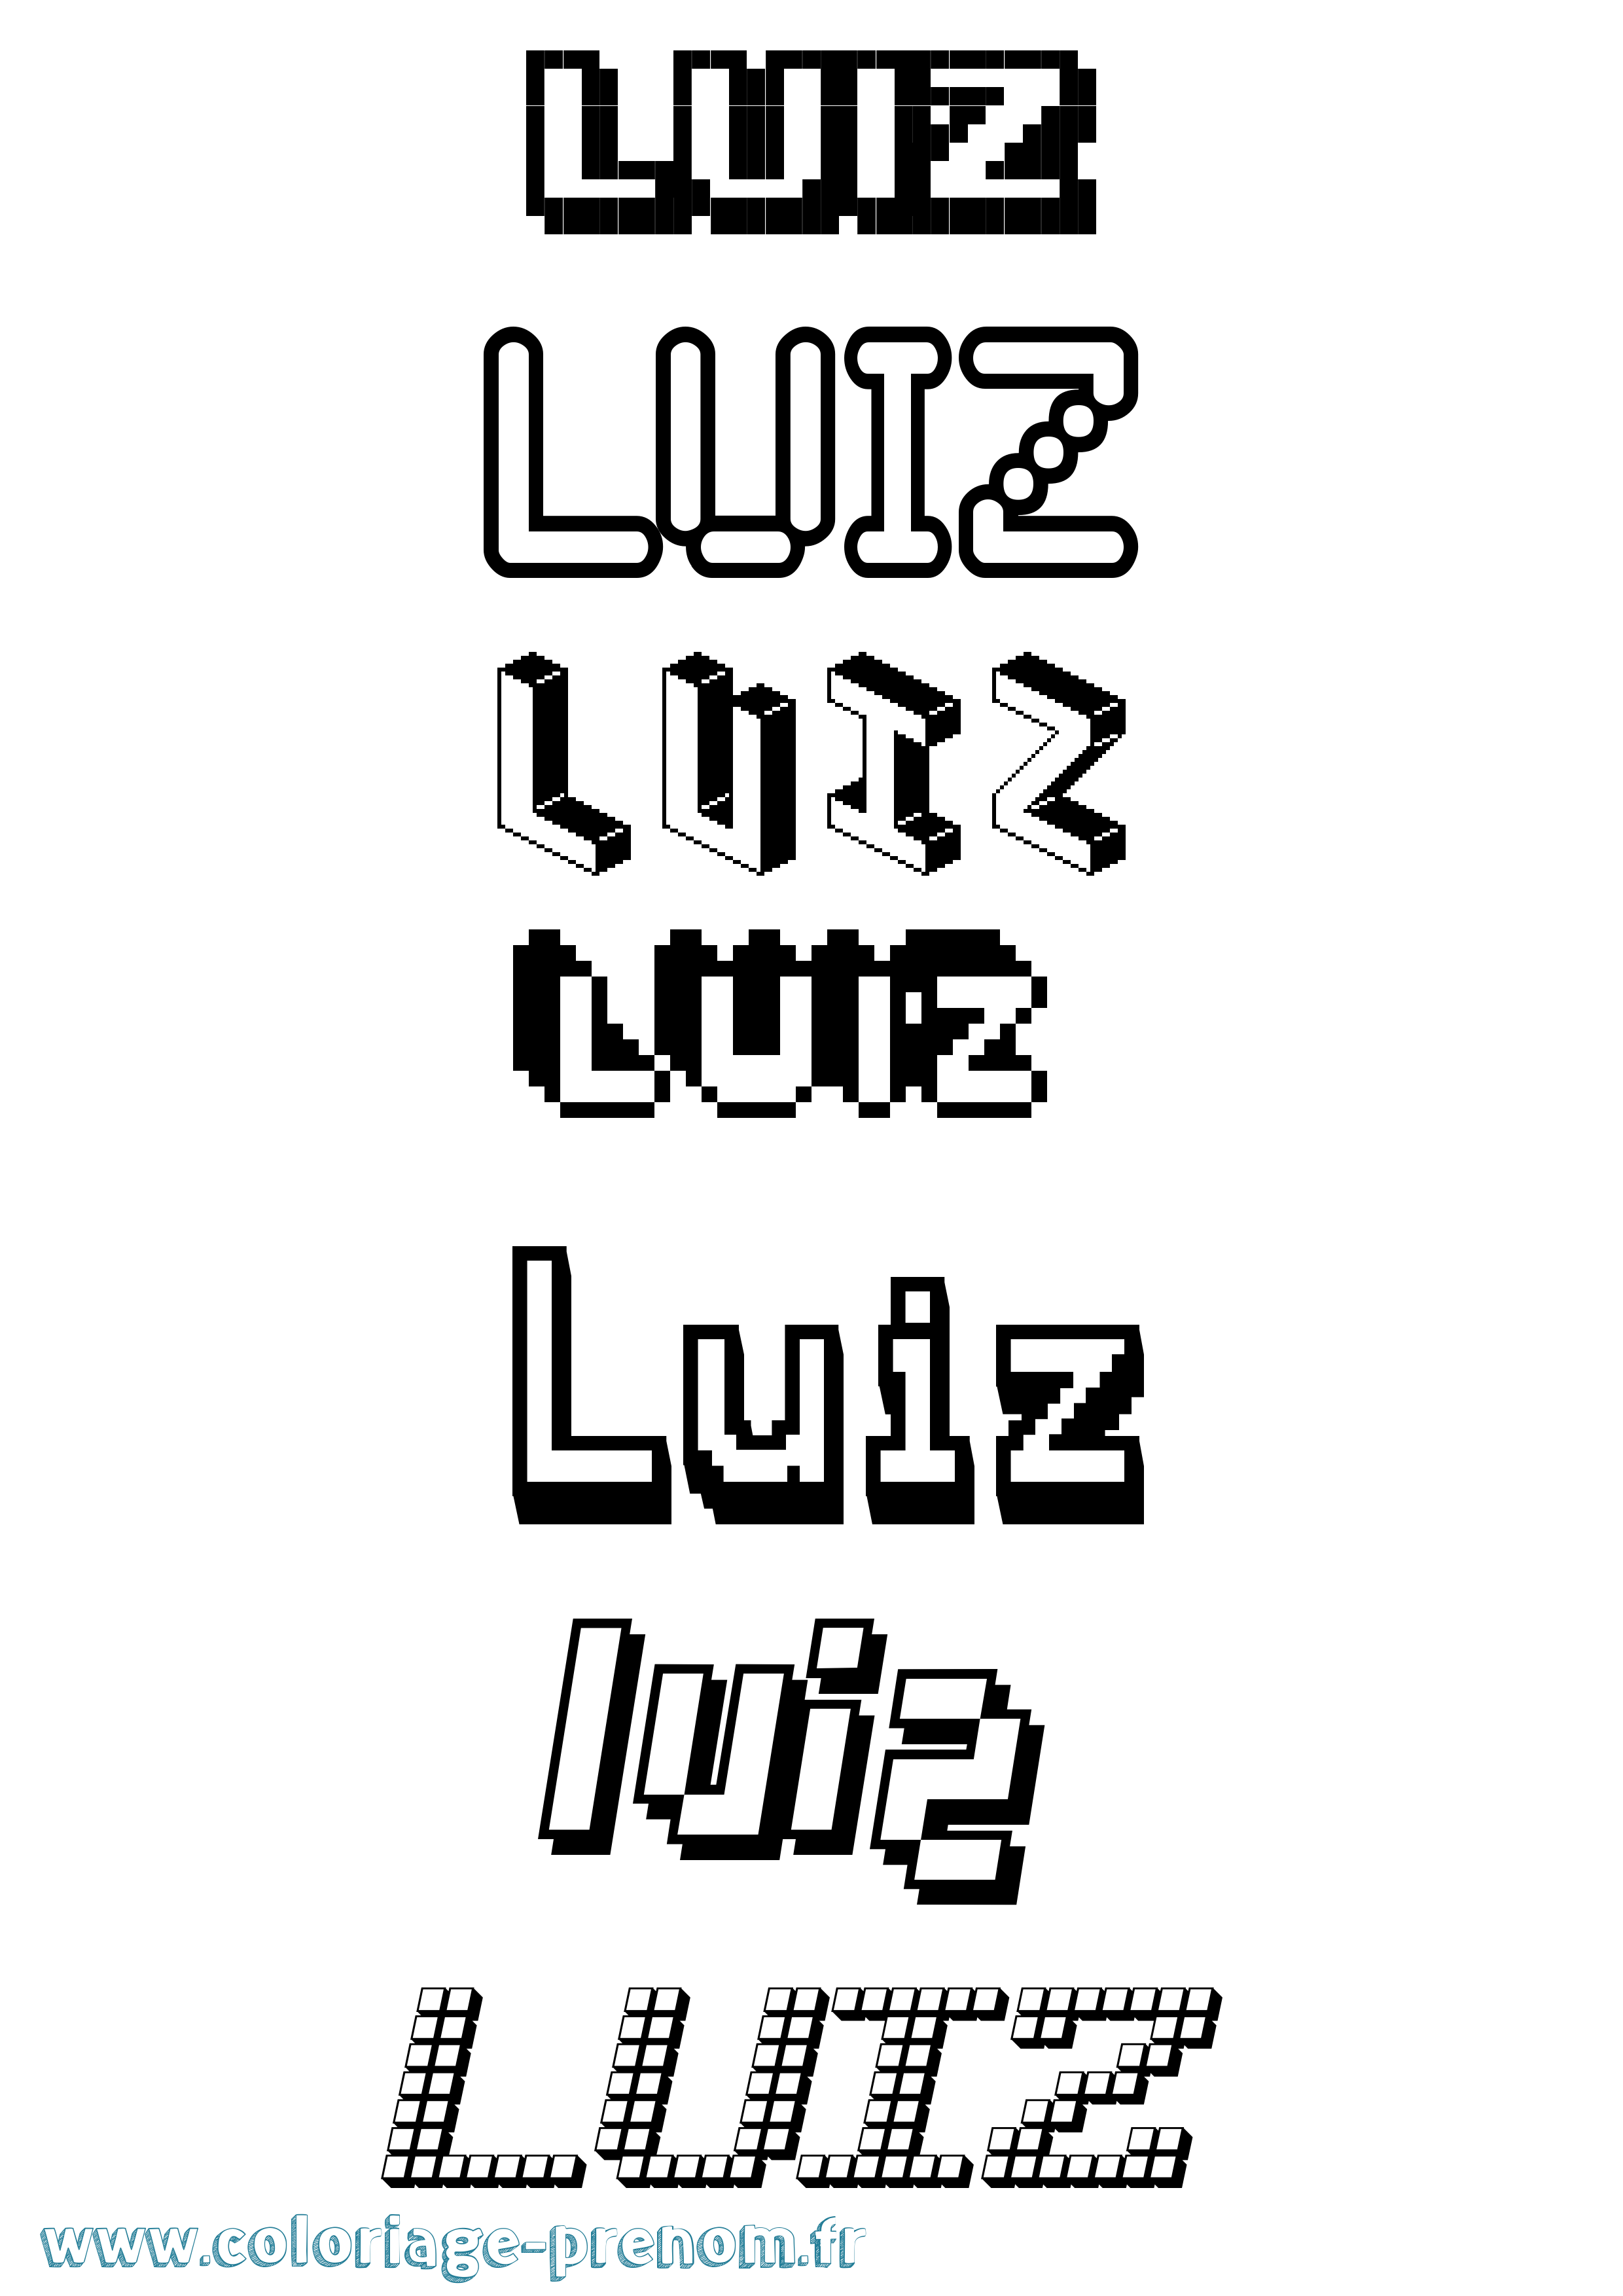 Coloriage prénom Luiz Pixel